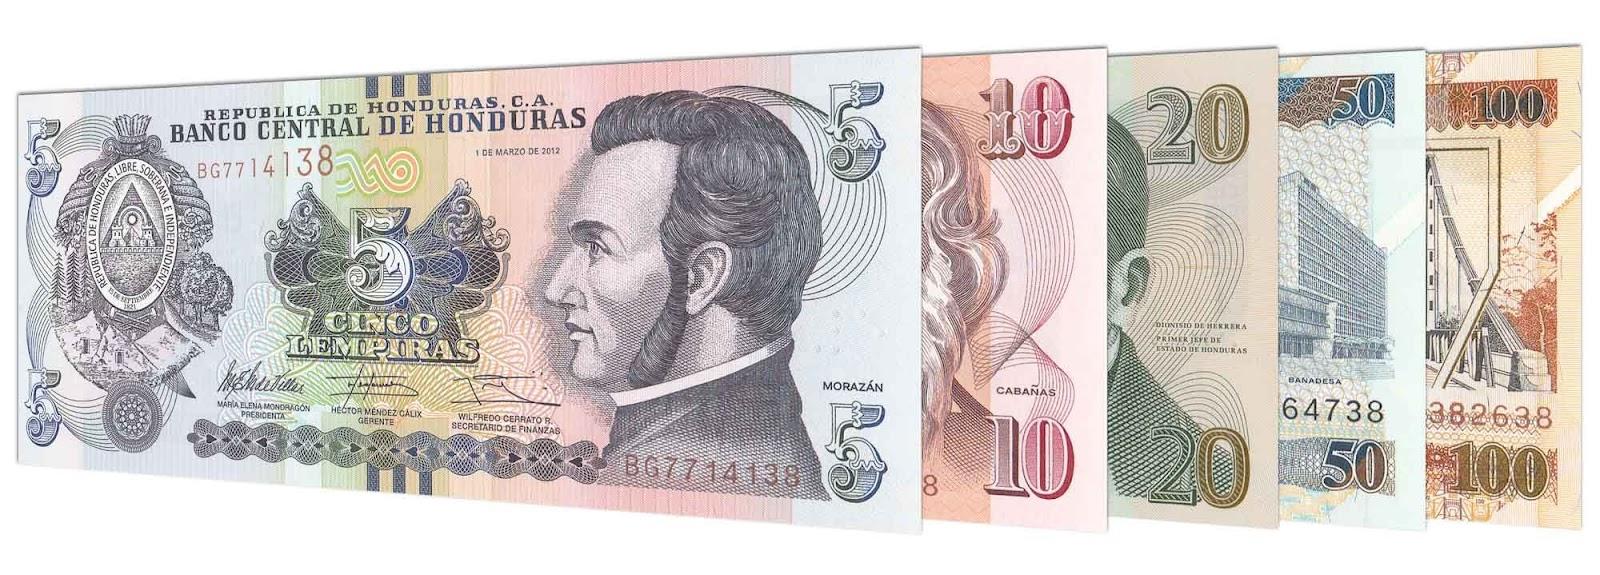 Honduran Lempira banknote series